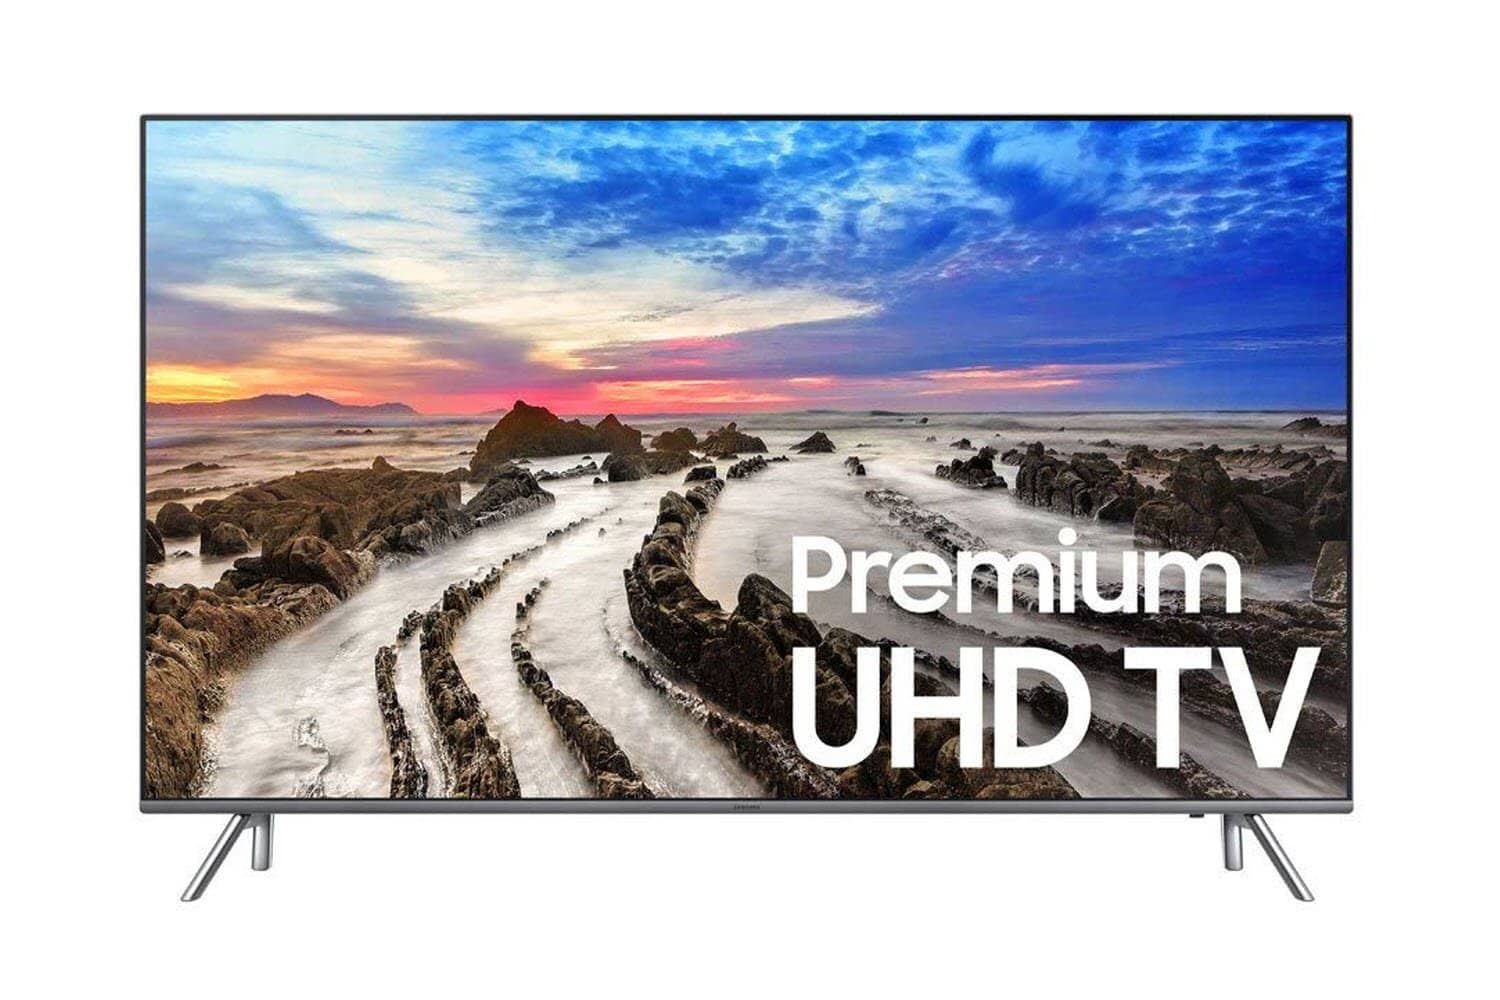 Samsung Electronics UN55MU8000 55-Inch 4K Ultra HD Smart LED TV